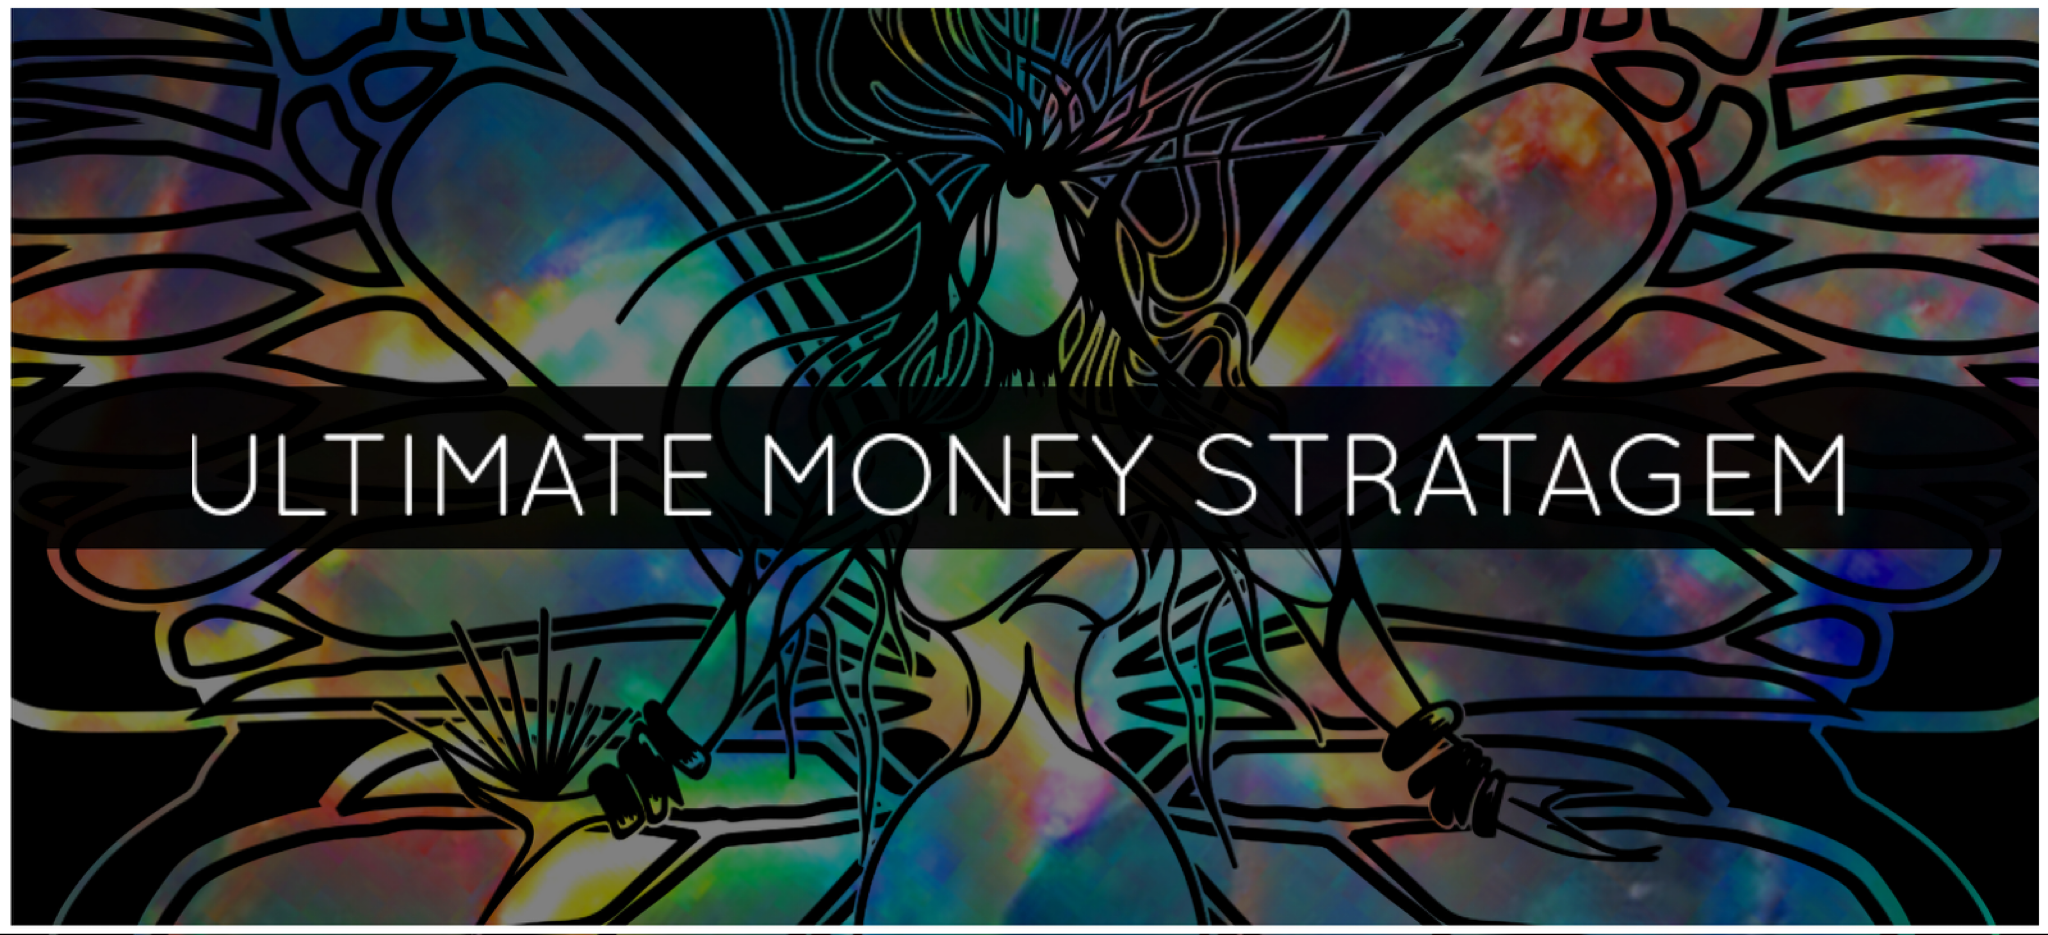 ULTIMATE MONEY STRATAGEM